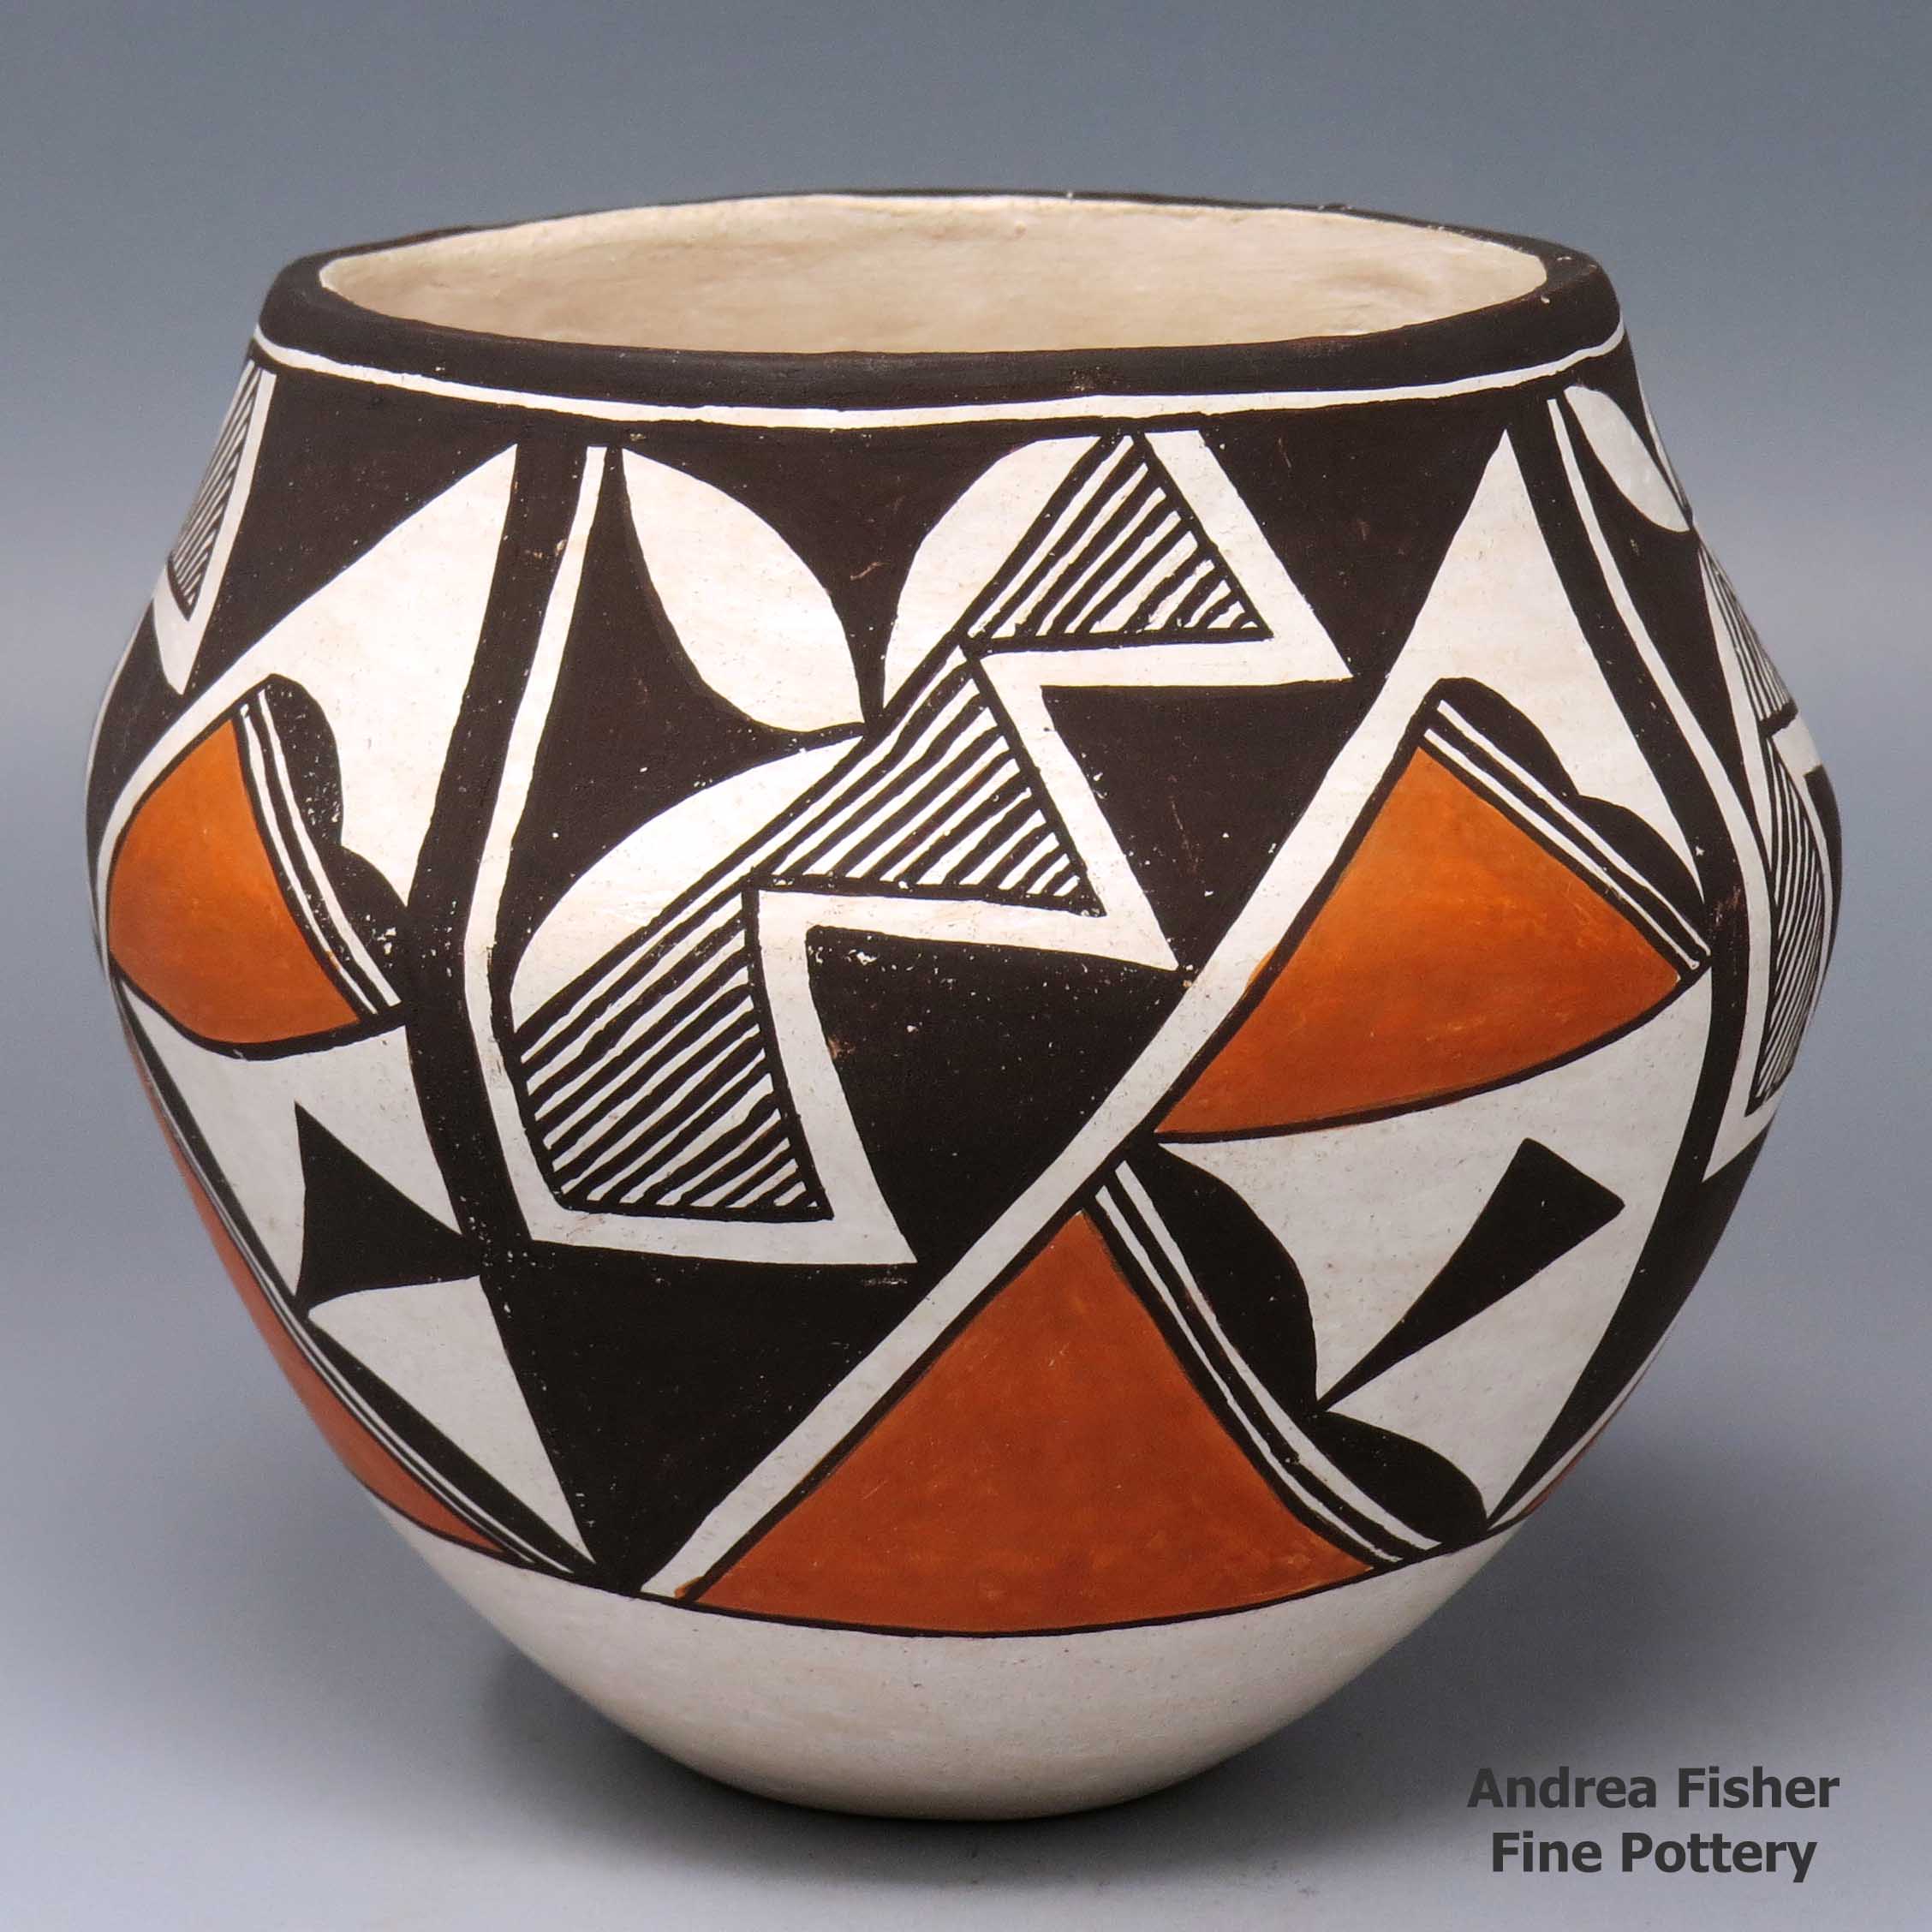 Ceramic polychrome jar with hand-painted geometric design / Maria Martinez  - Gilcrease Museum